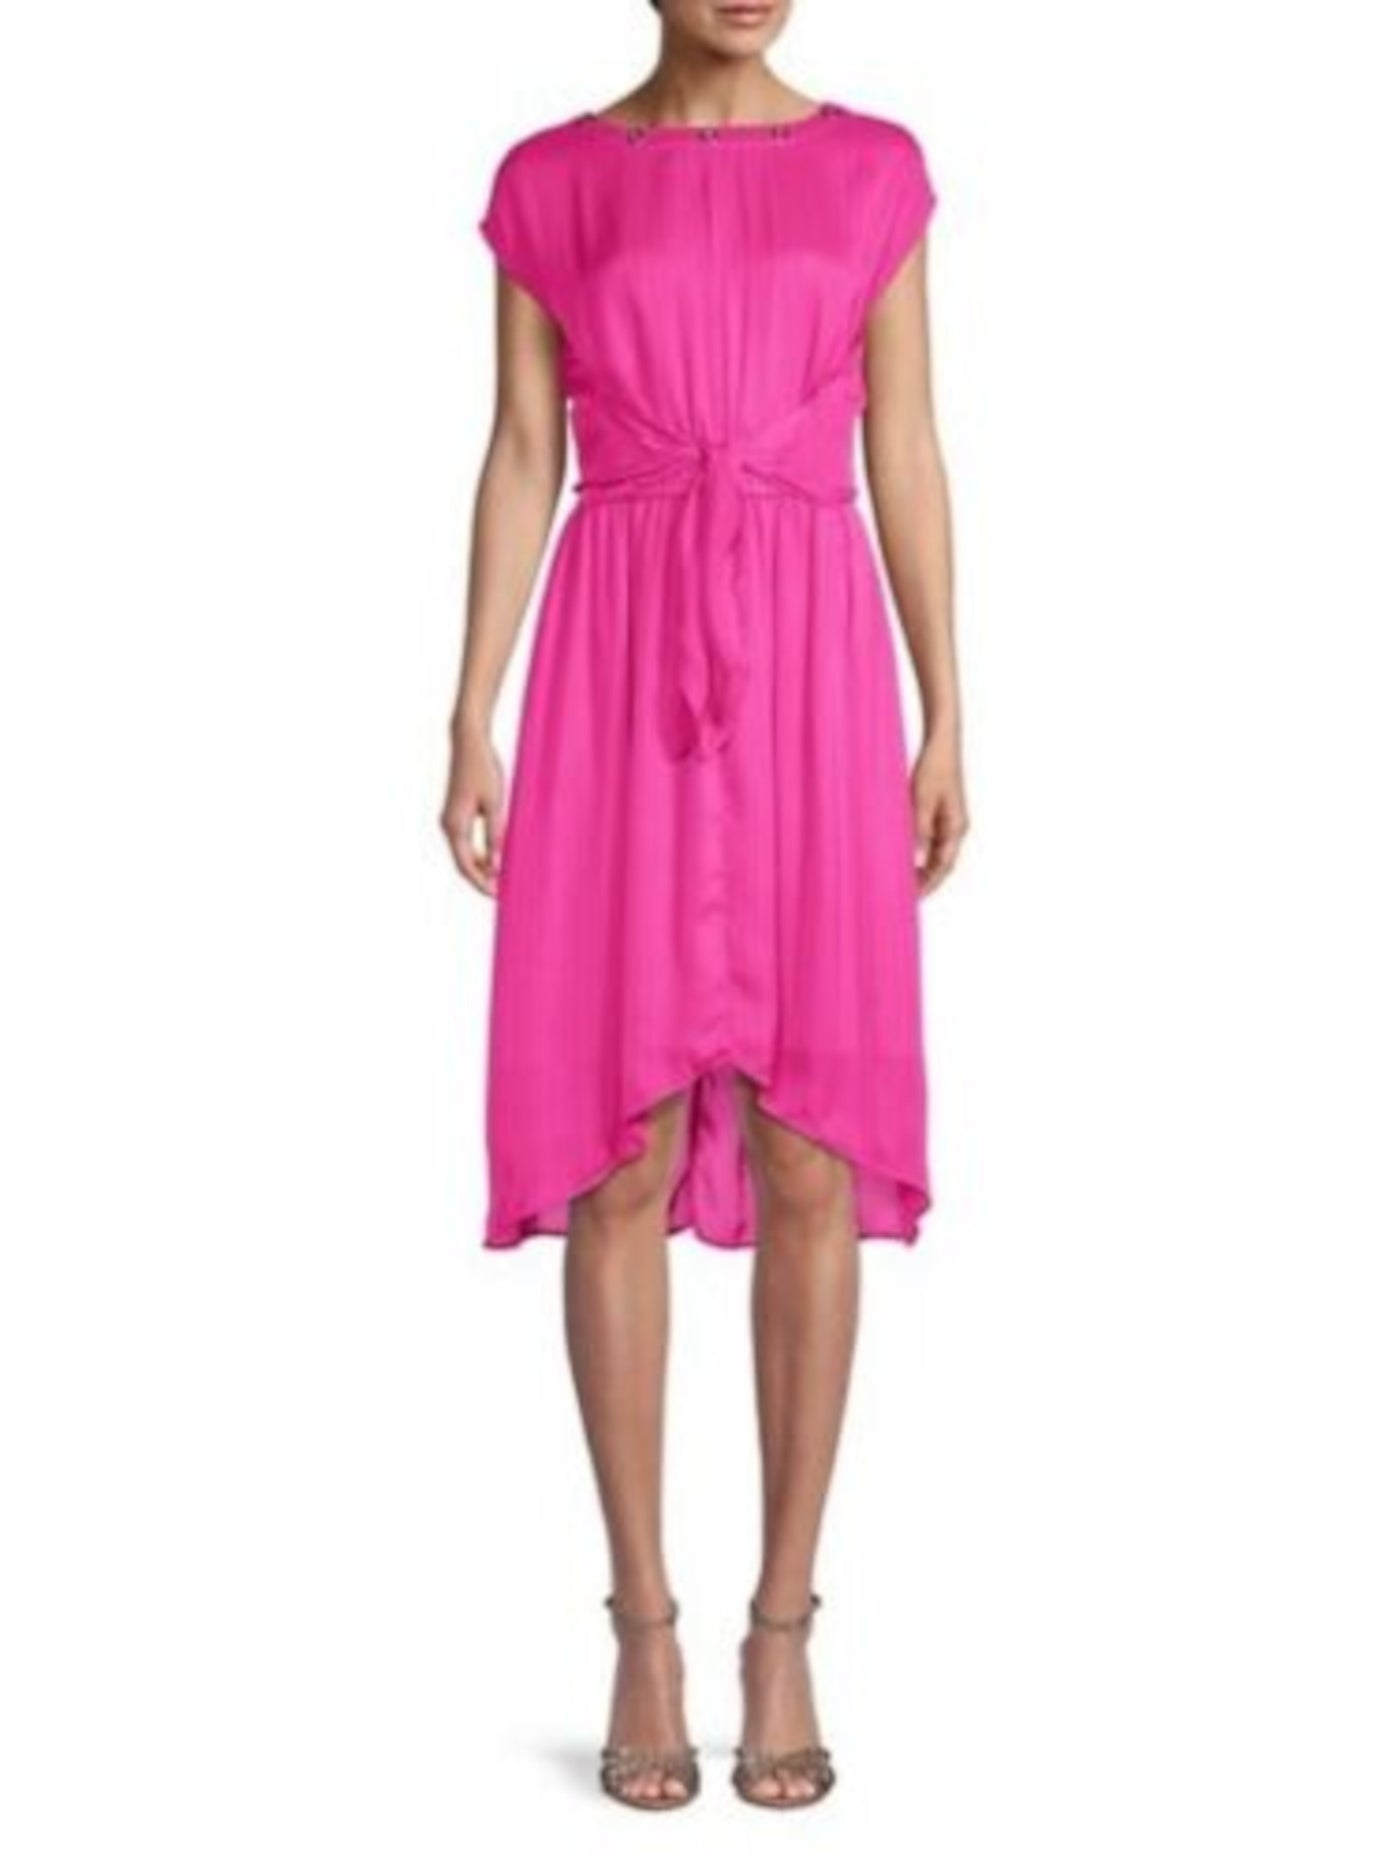 MICHAEL KORS Womens Pink Tie Sheer Keyhole Closure Grommets Hi-lo Cap Sleeve Round Neck Below The Knee Wear To Work Fit + Flare Dress XS